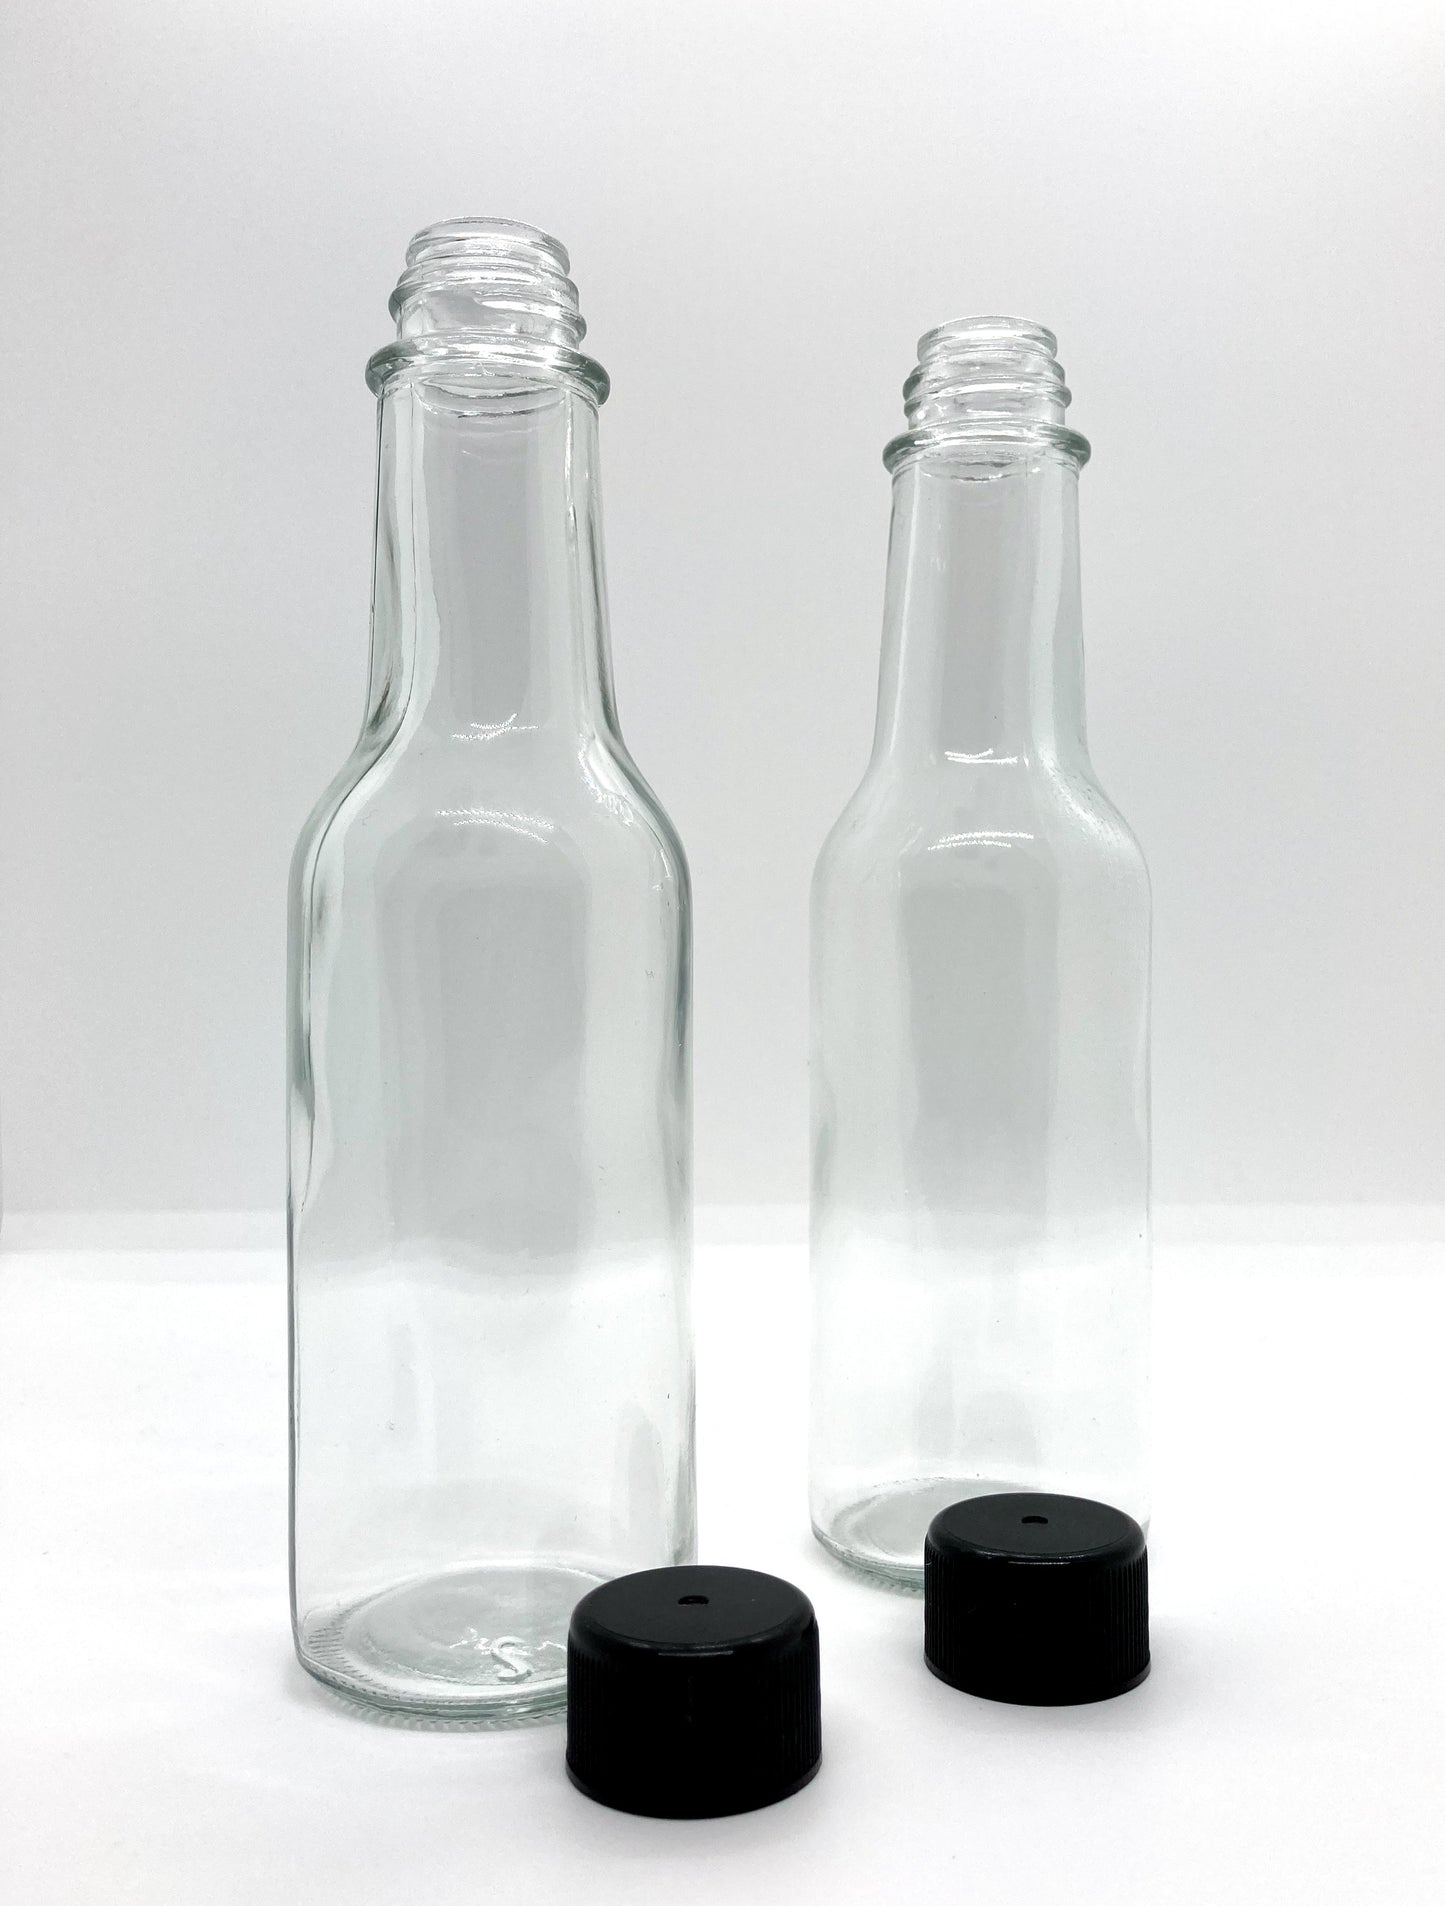 150mL. (Woozy Bottle) Clear Round Glass Bottle with Black Cap